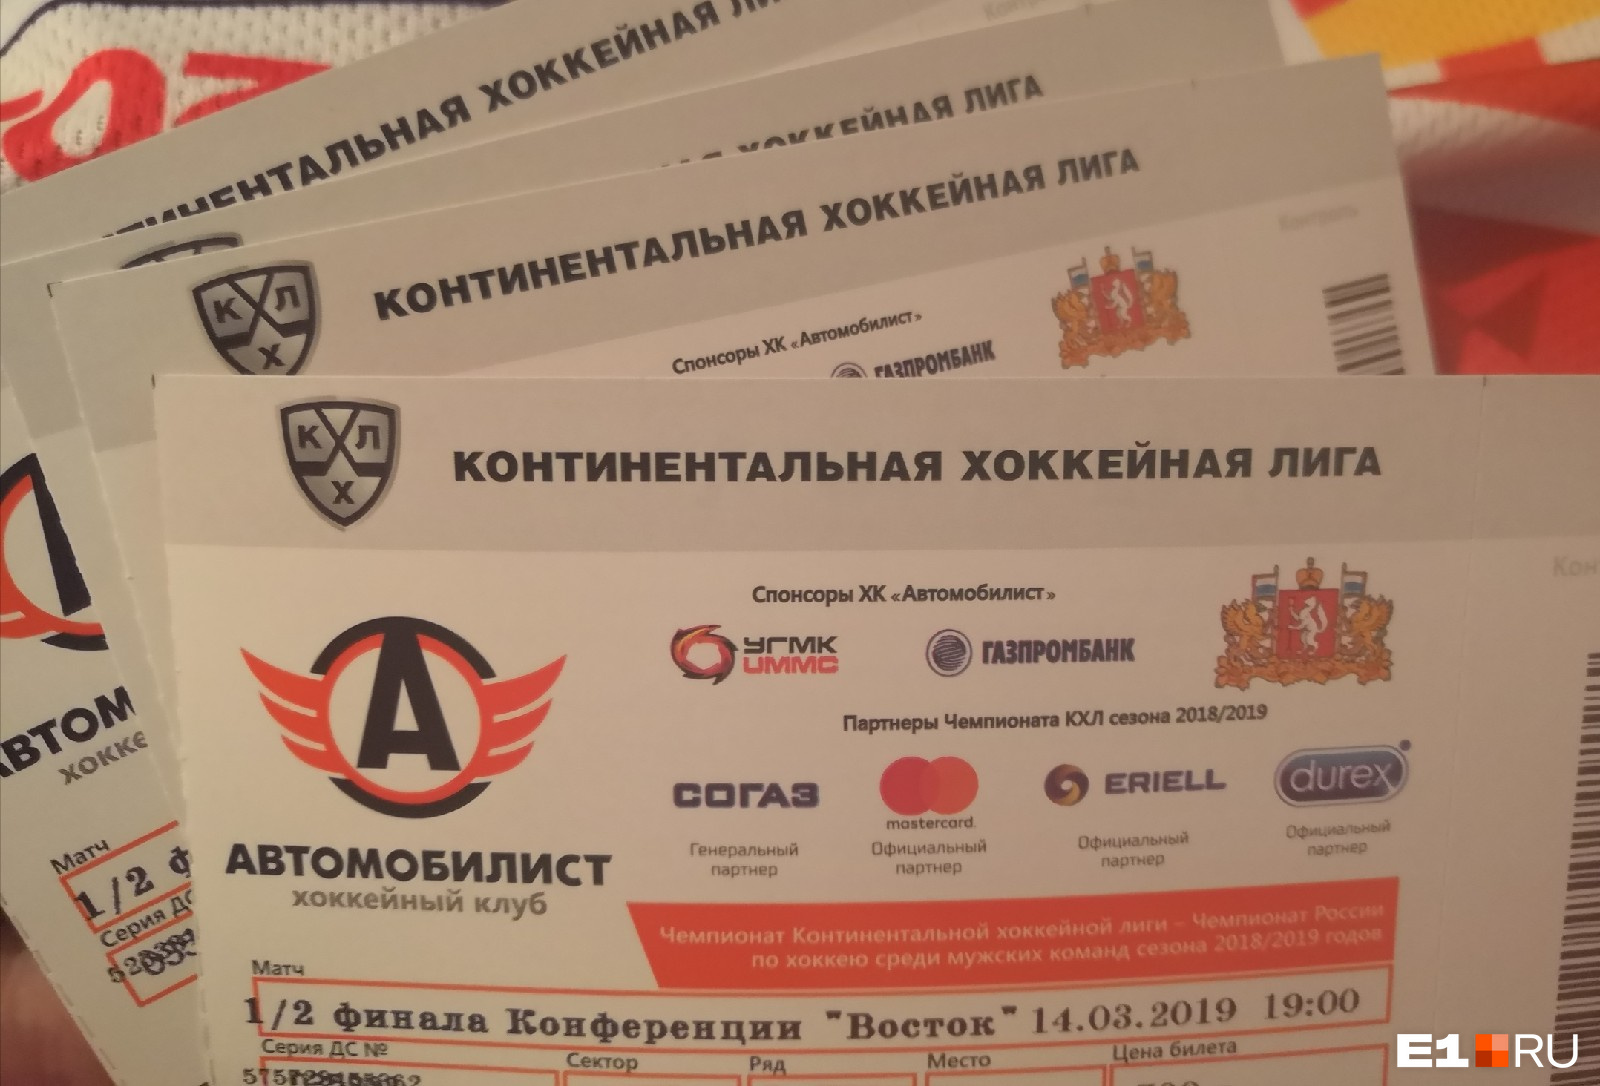 Игра екатеринбург билеты. Билет на матч Автомобилист в Екатеринбурге. Билет на хоккей Автомобилист. Билеты хк Автомобилист. Сколько стоят билеты на матч Автомобилист.